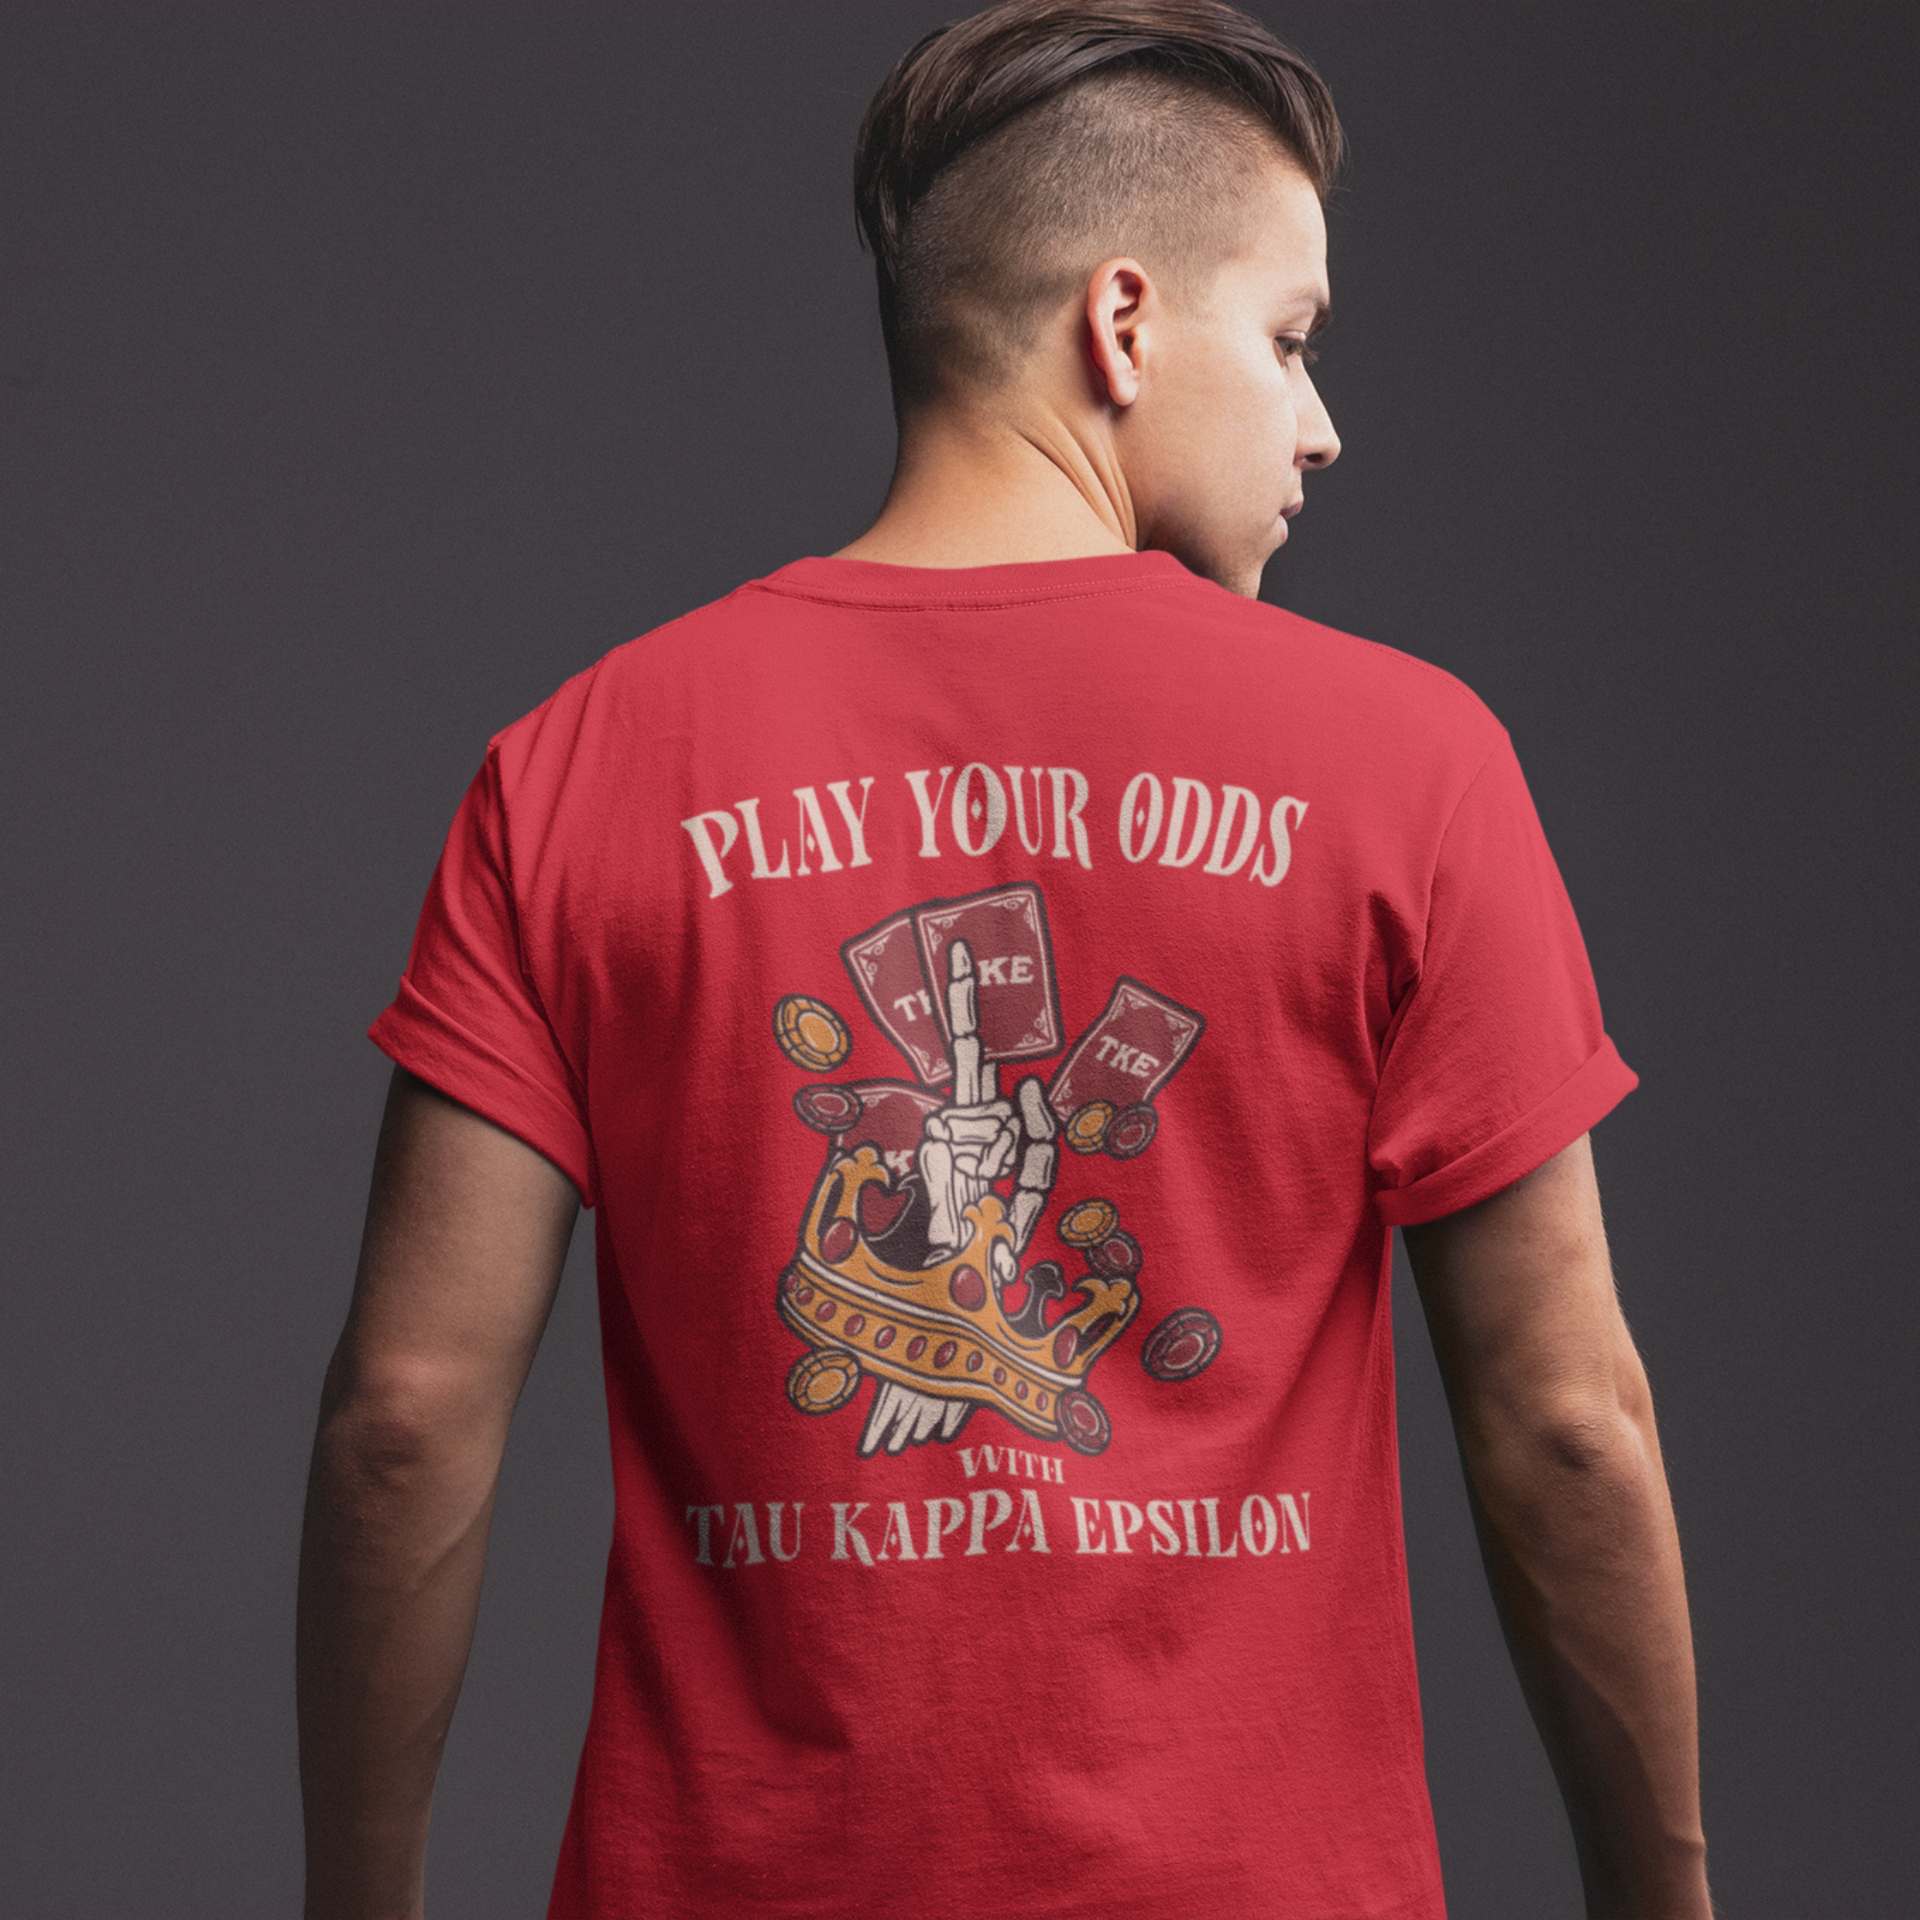 Tau Kappa Epsilon Graphic T-Shirt | Play Your Odds | Tau Kappa Epsilon Fraternity model 